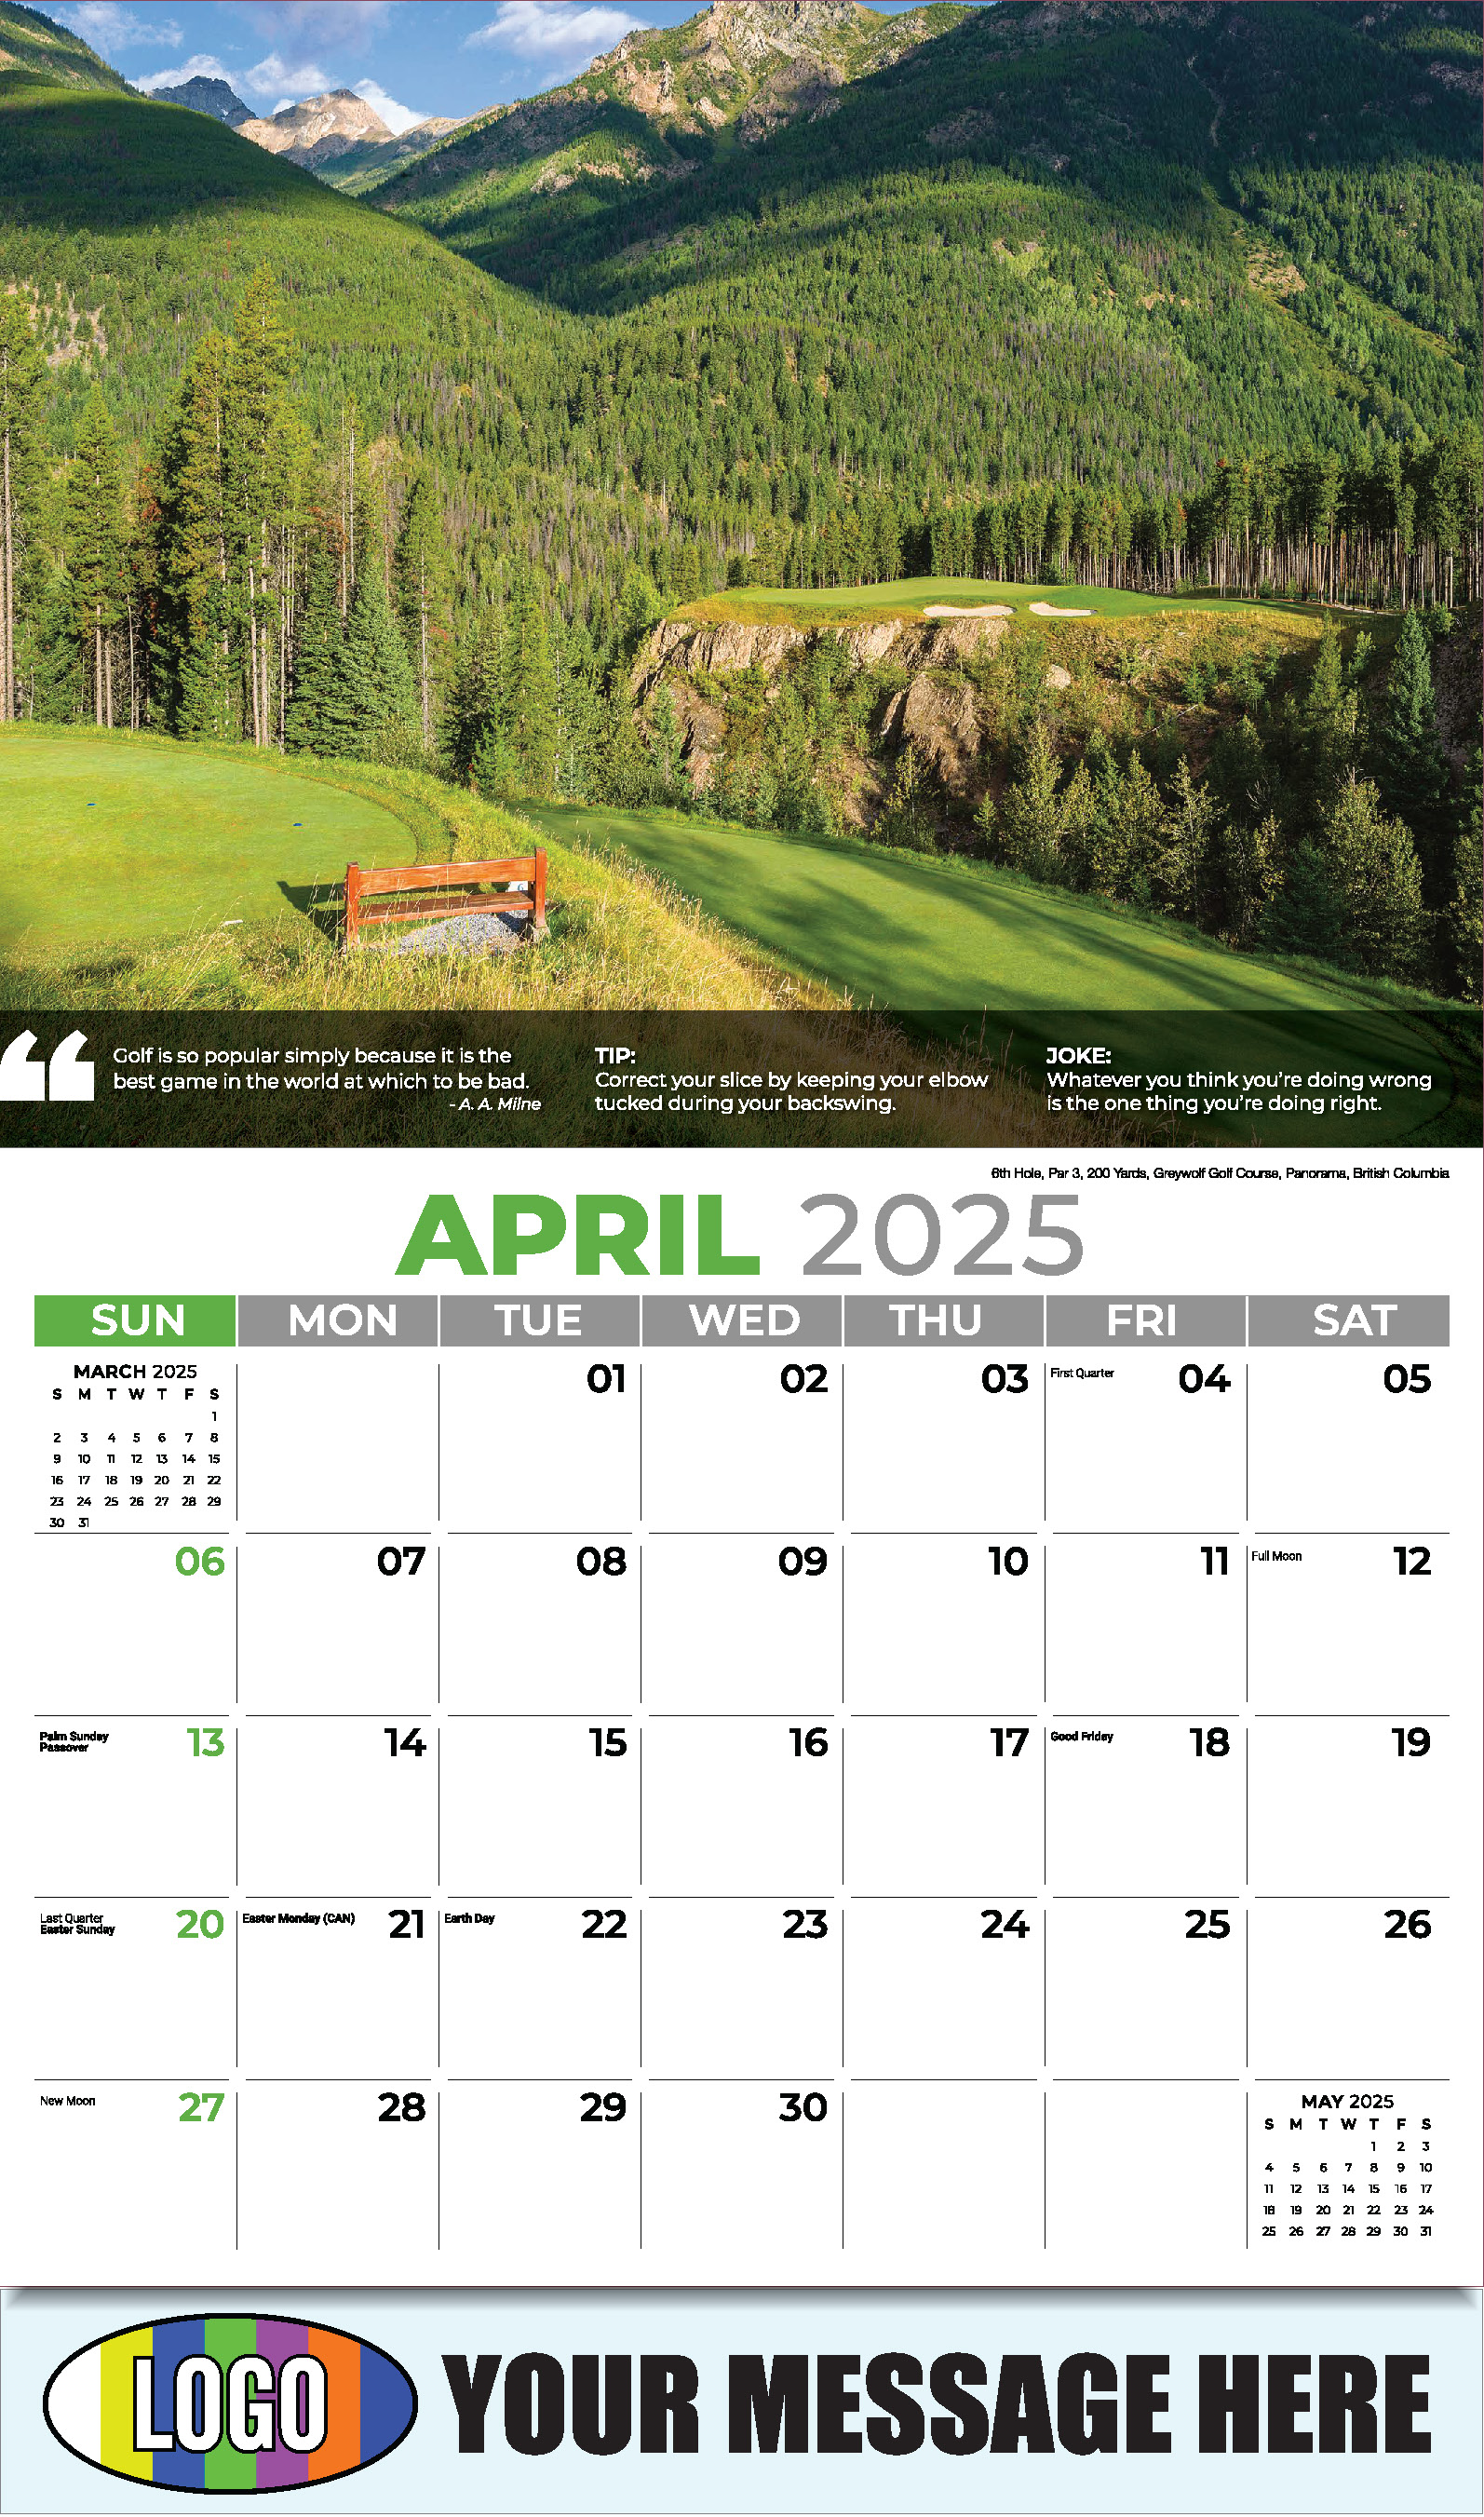 Golf Tips 2025 Business Promo Calendar - April